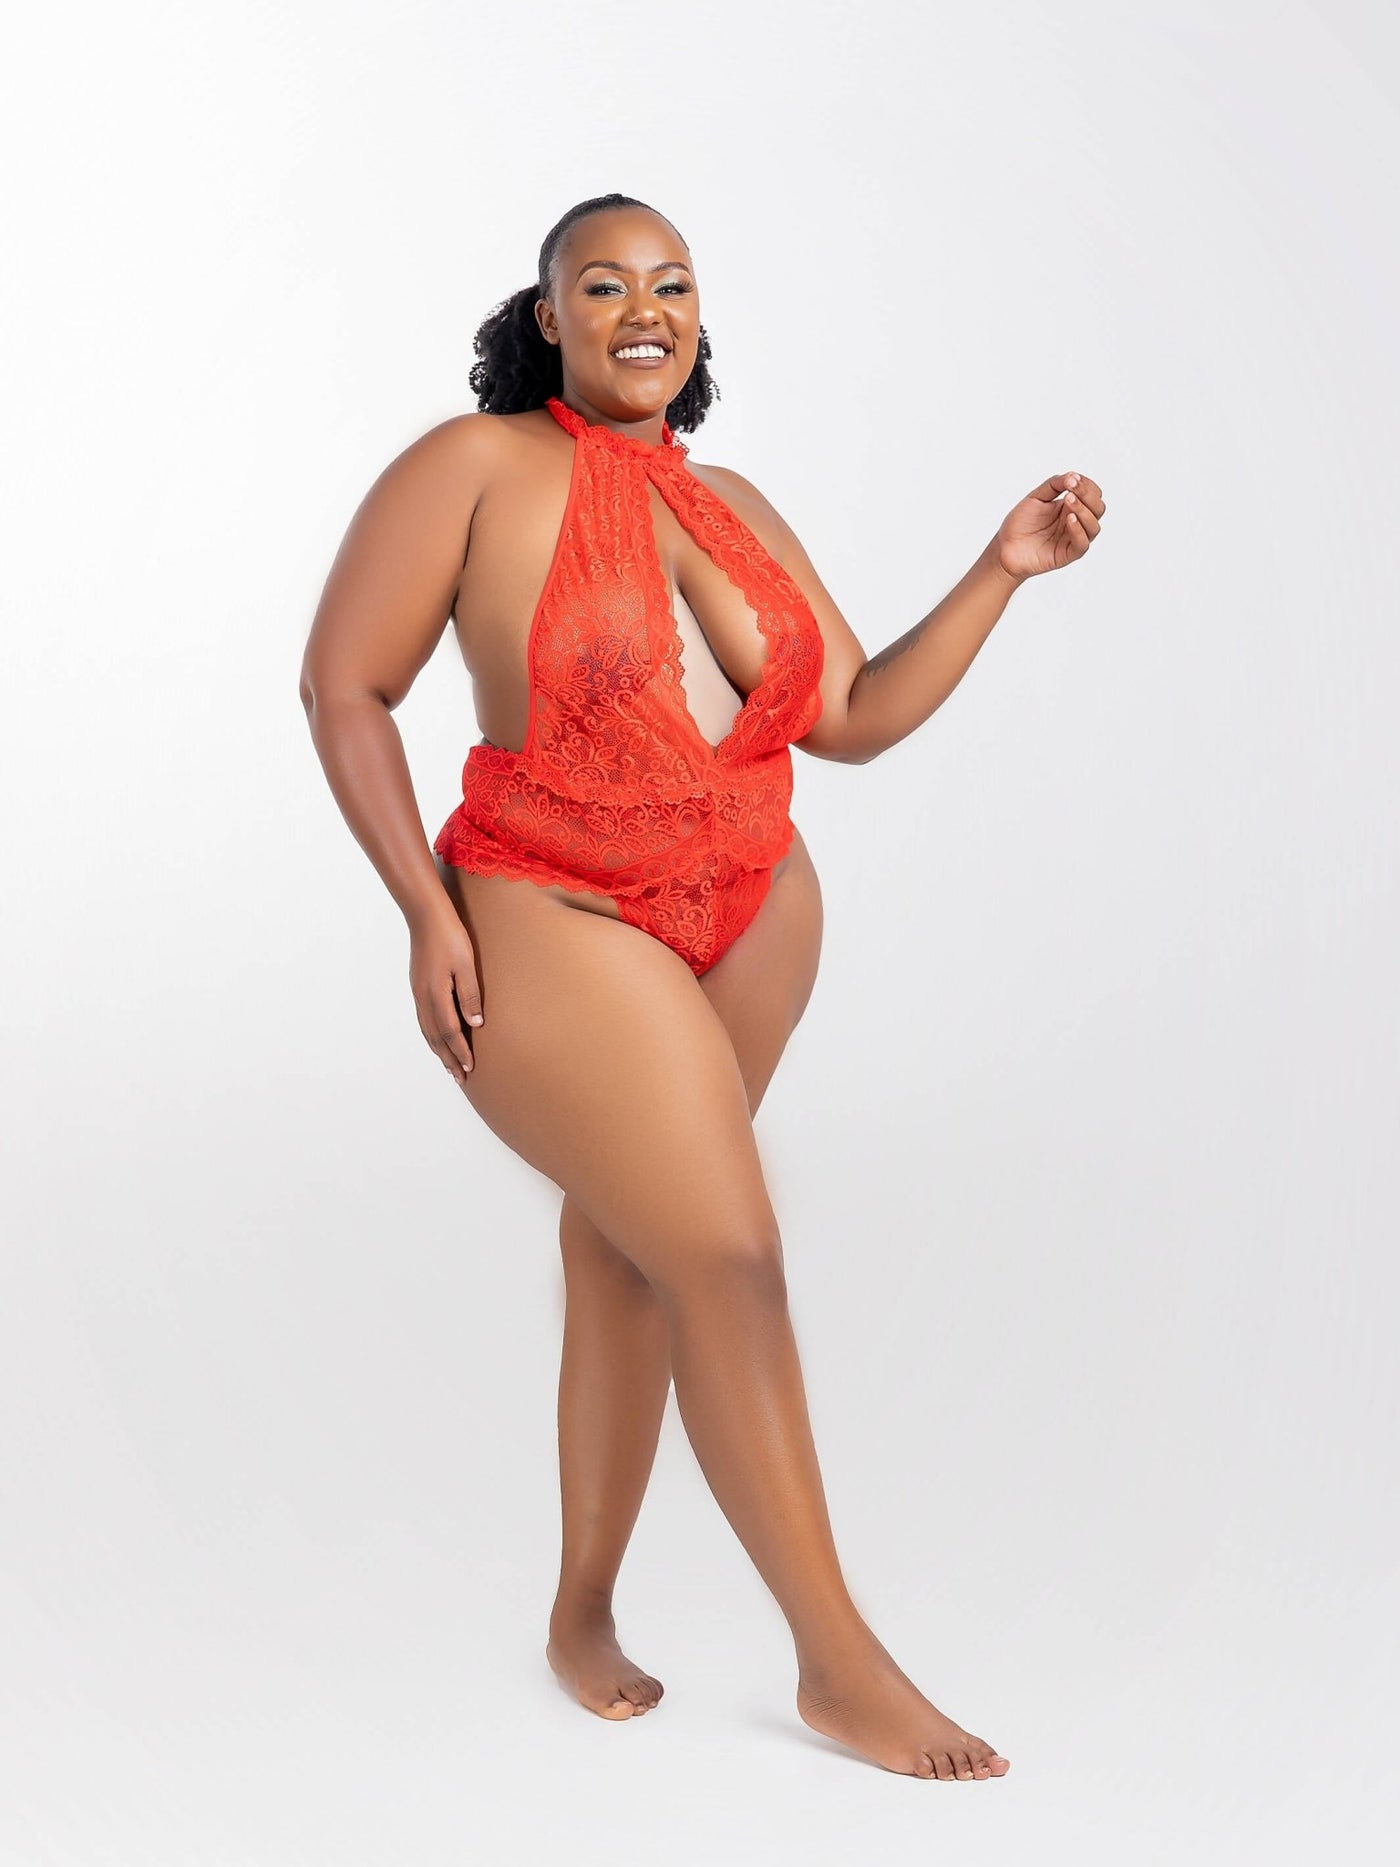 IntimatesKenya Exquisite Lace Open Cup Bodysuit-Red - Shopzetu